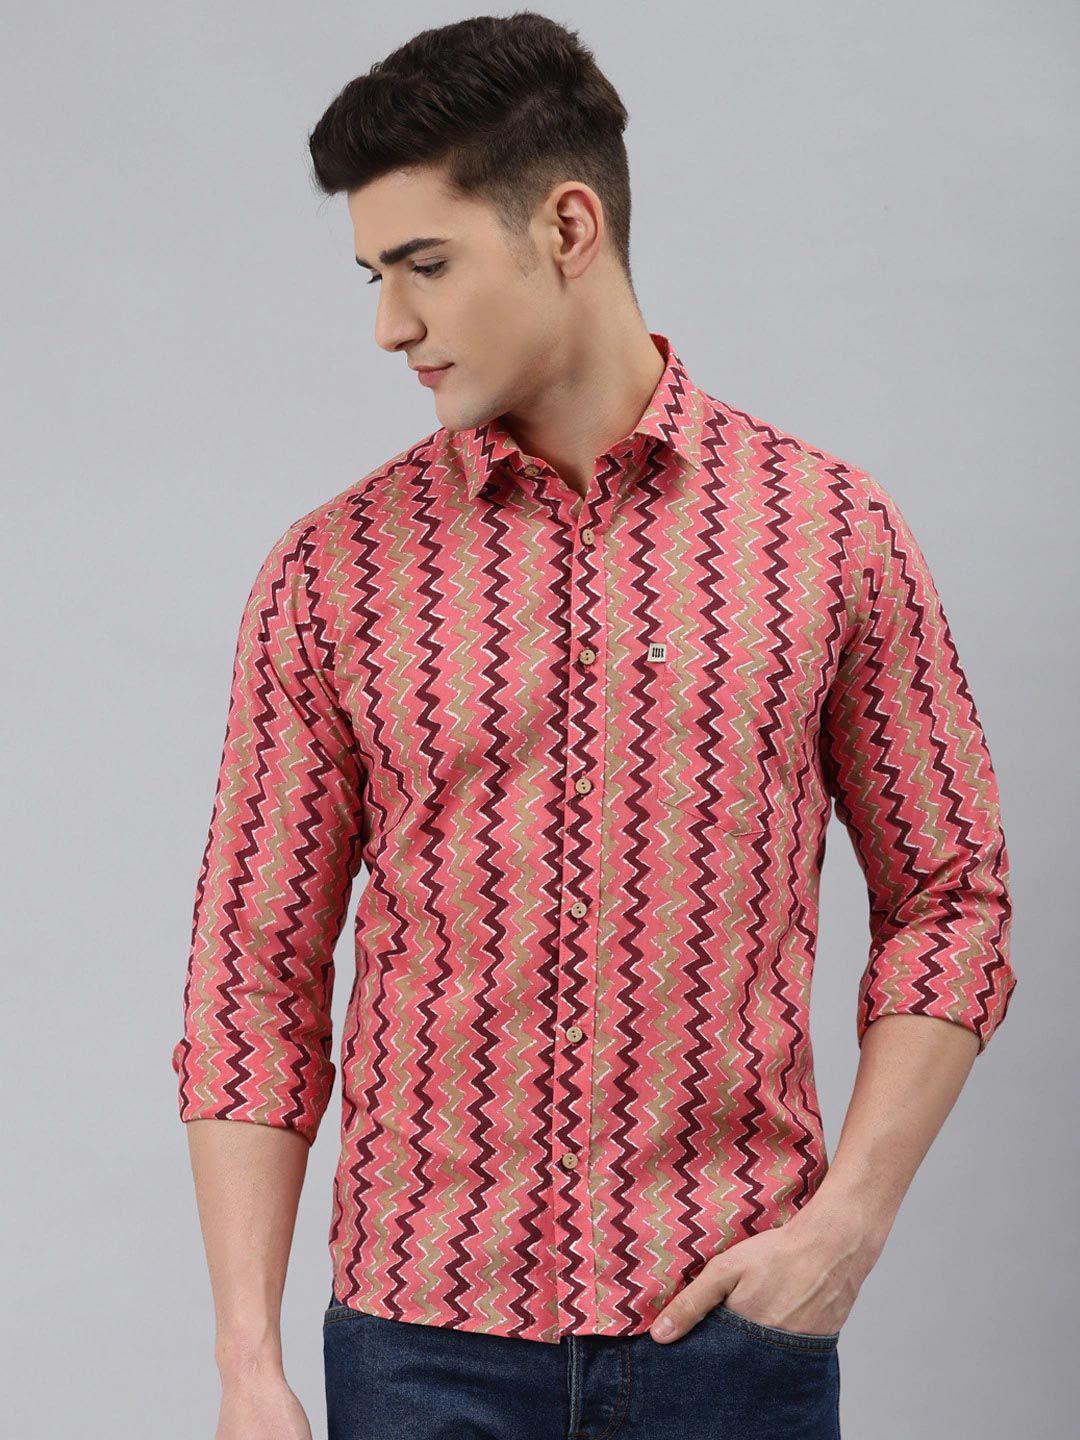 readiprint fashions men chevron printed casual cotton shirt